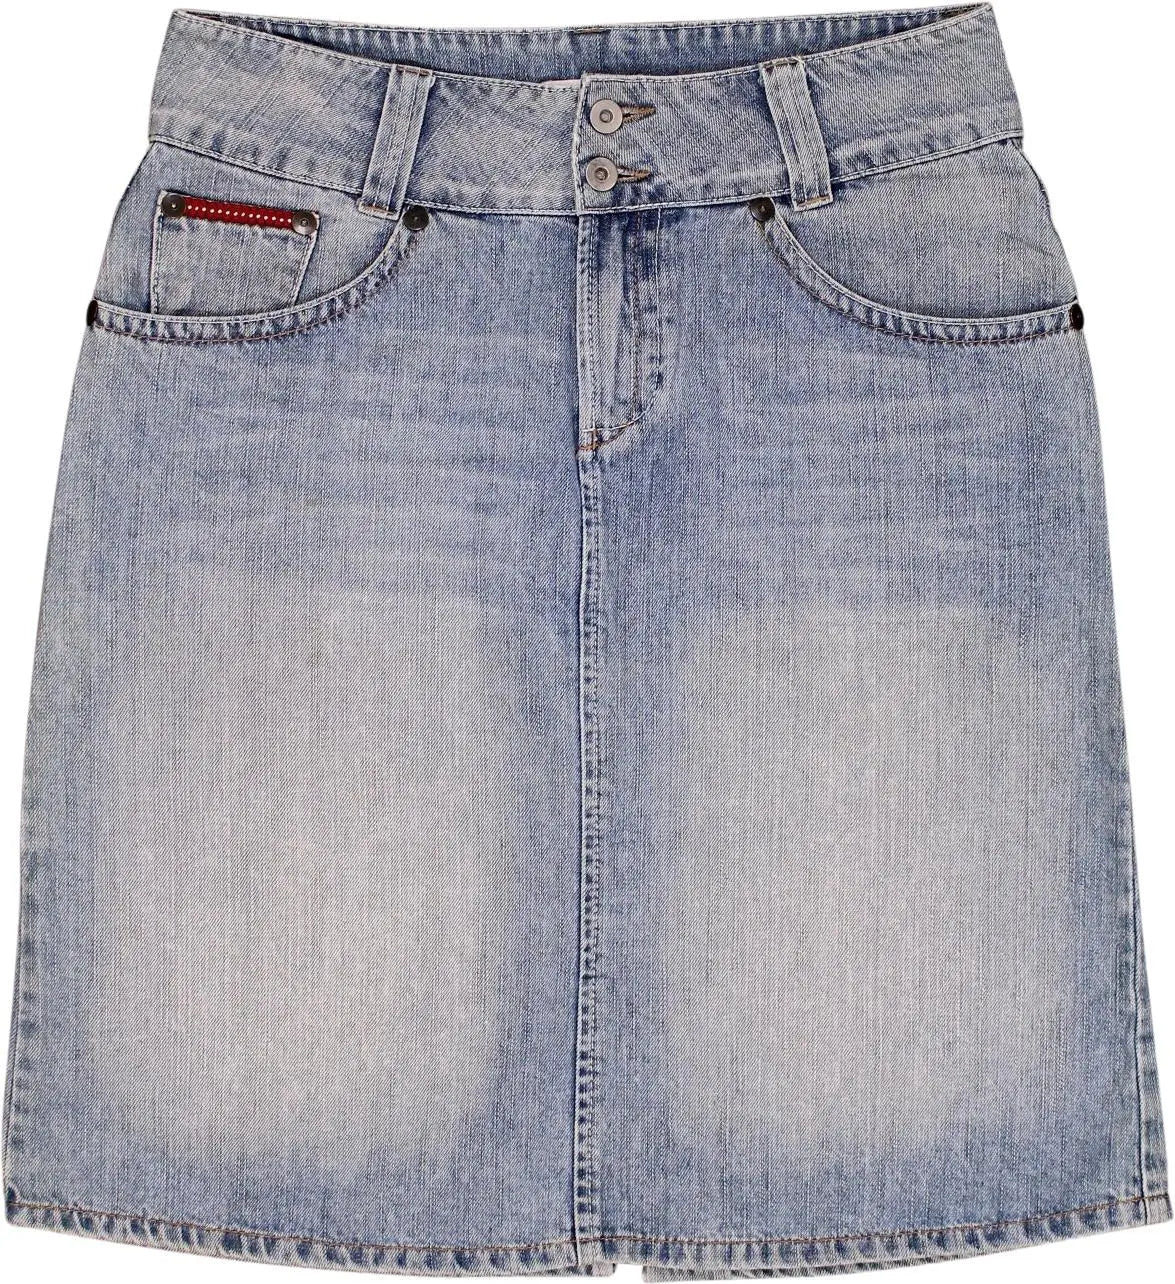 Steps - Denim Skirt- ThriftTale.com - Vintage and second handclothing